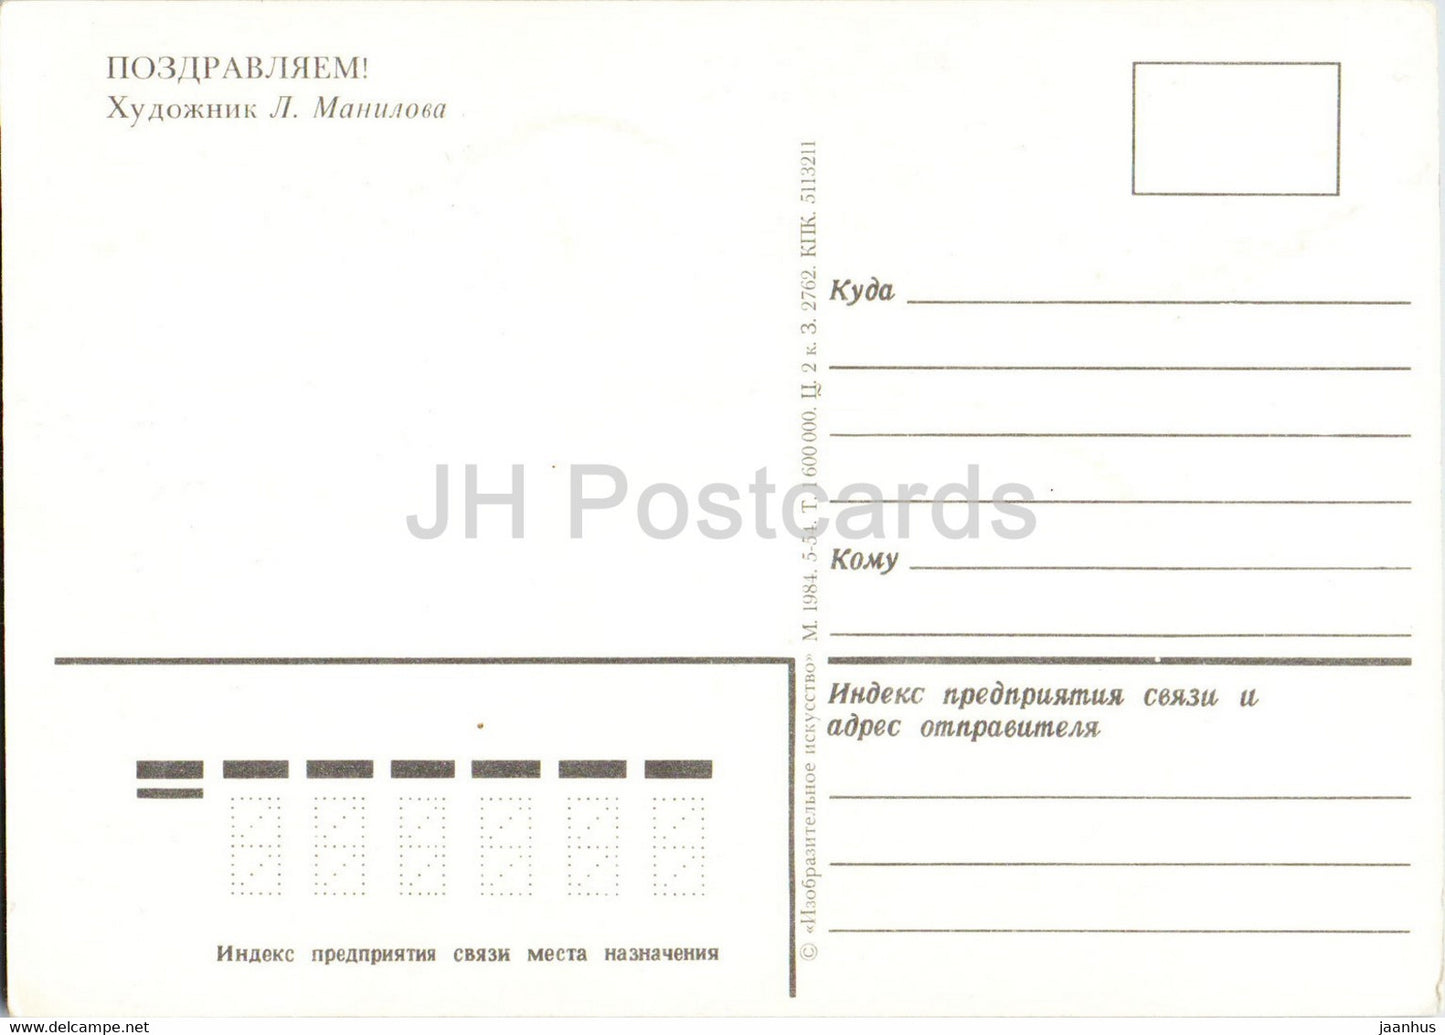 Carte de vœux de L. Manilova - ours - âne - 1984 - Russie URSS - inutilisée